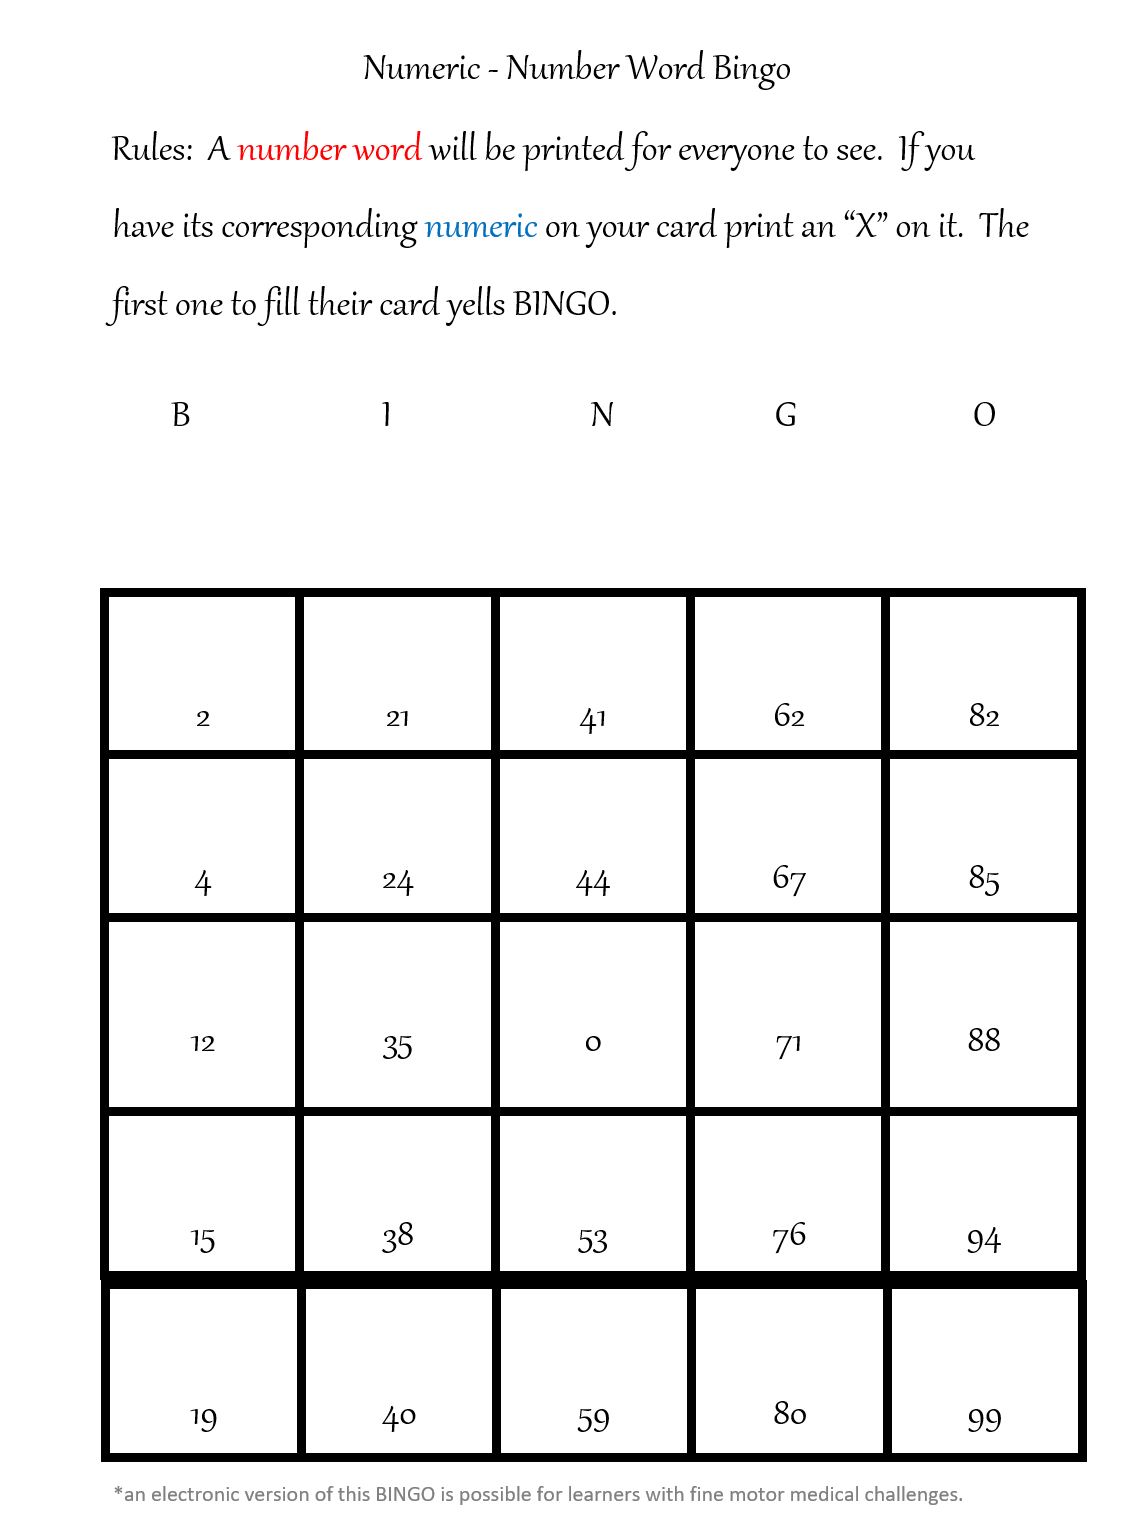 number word bingo pg2 of 5